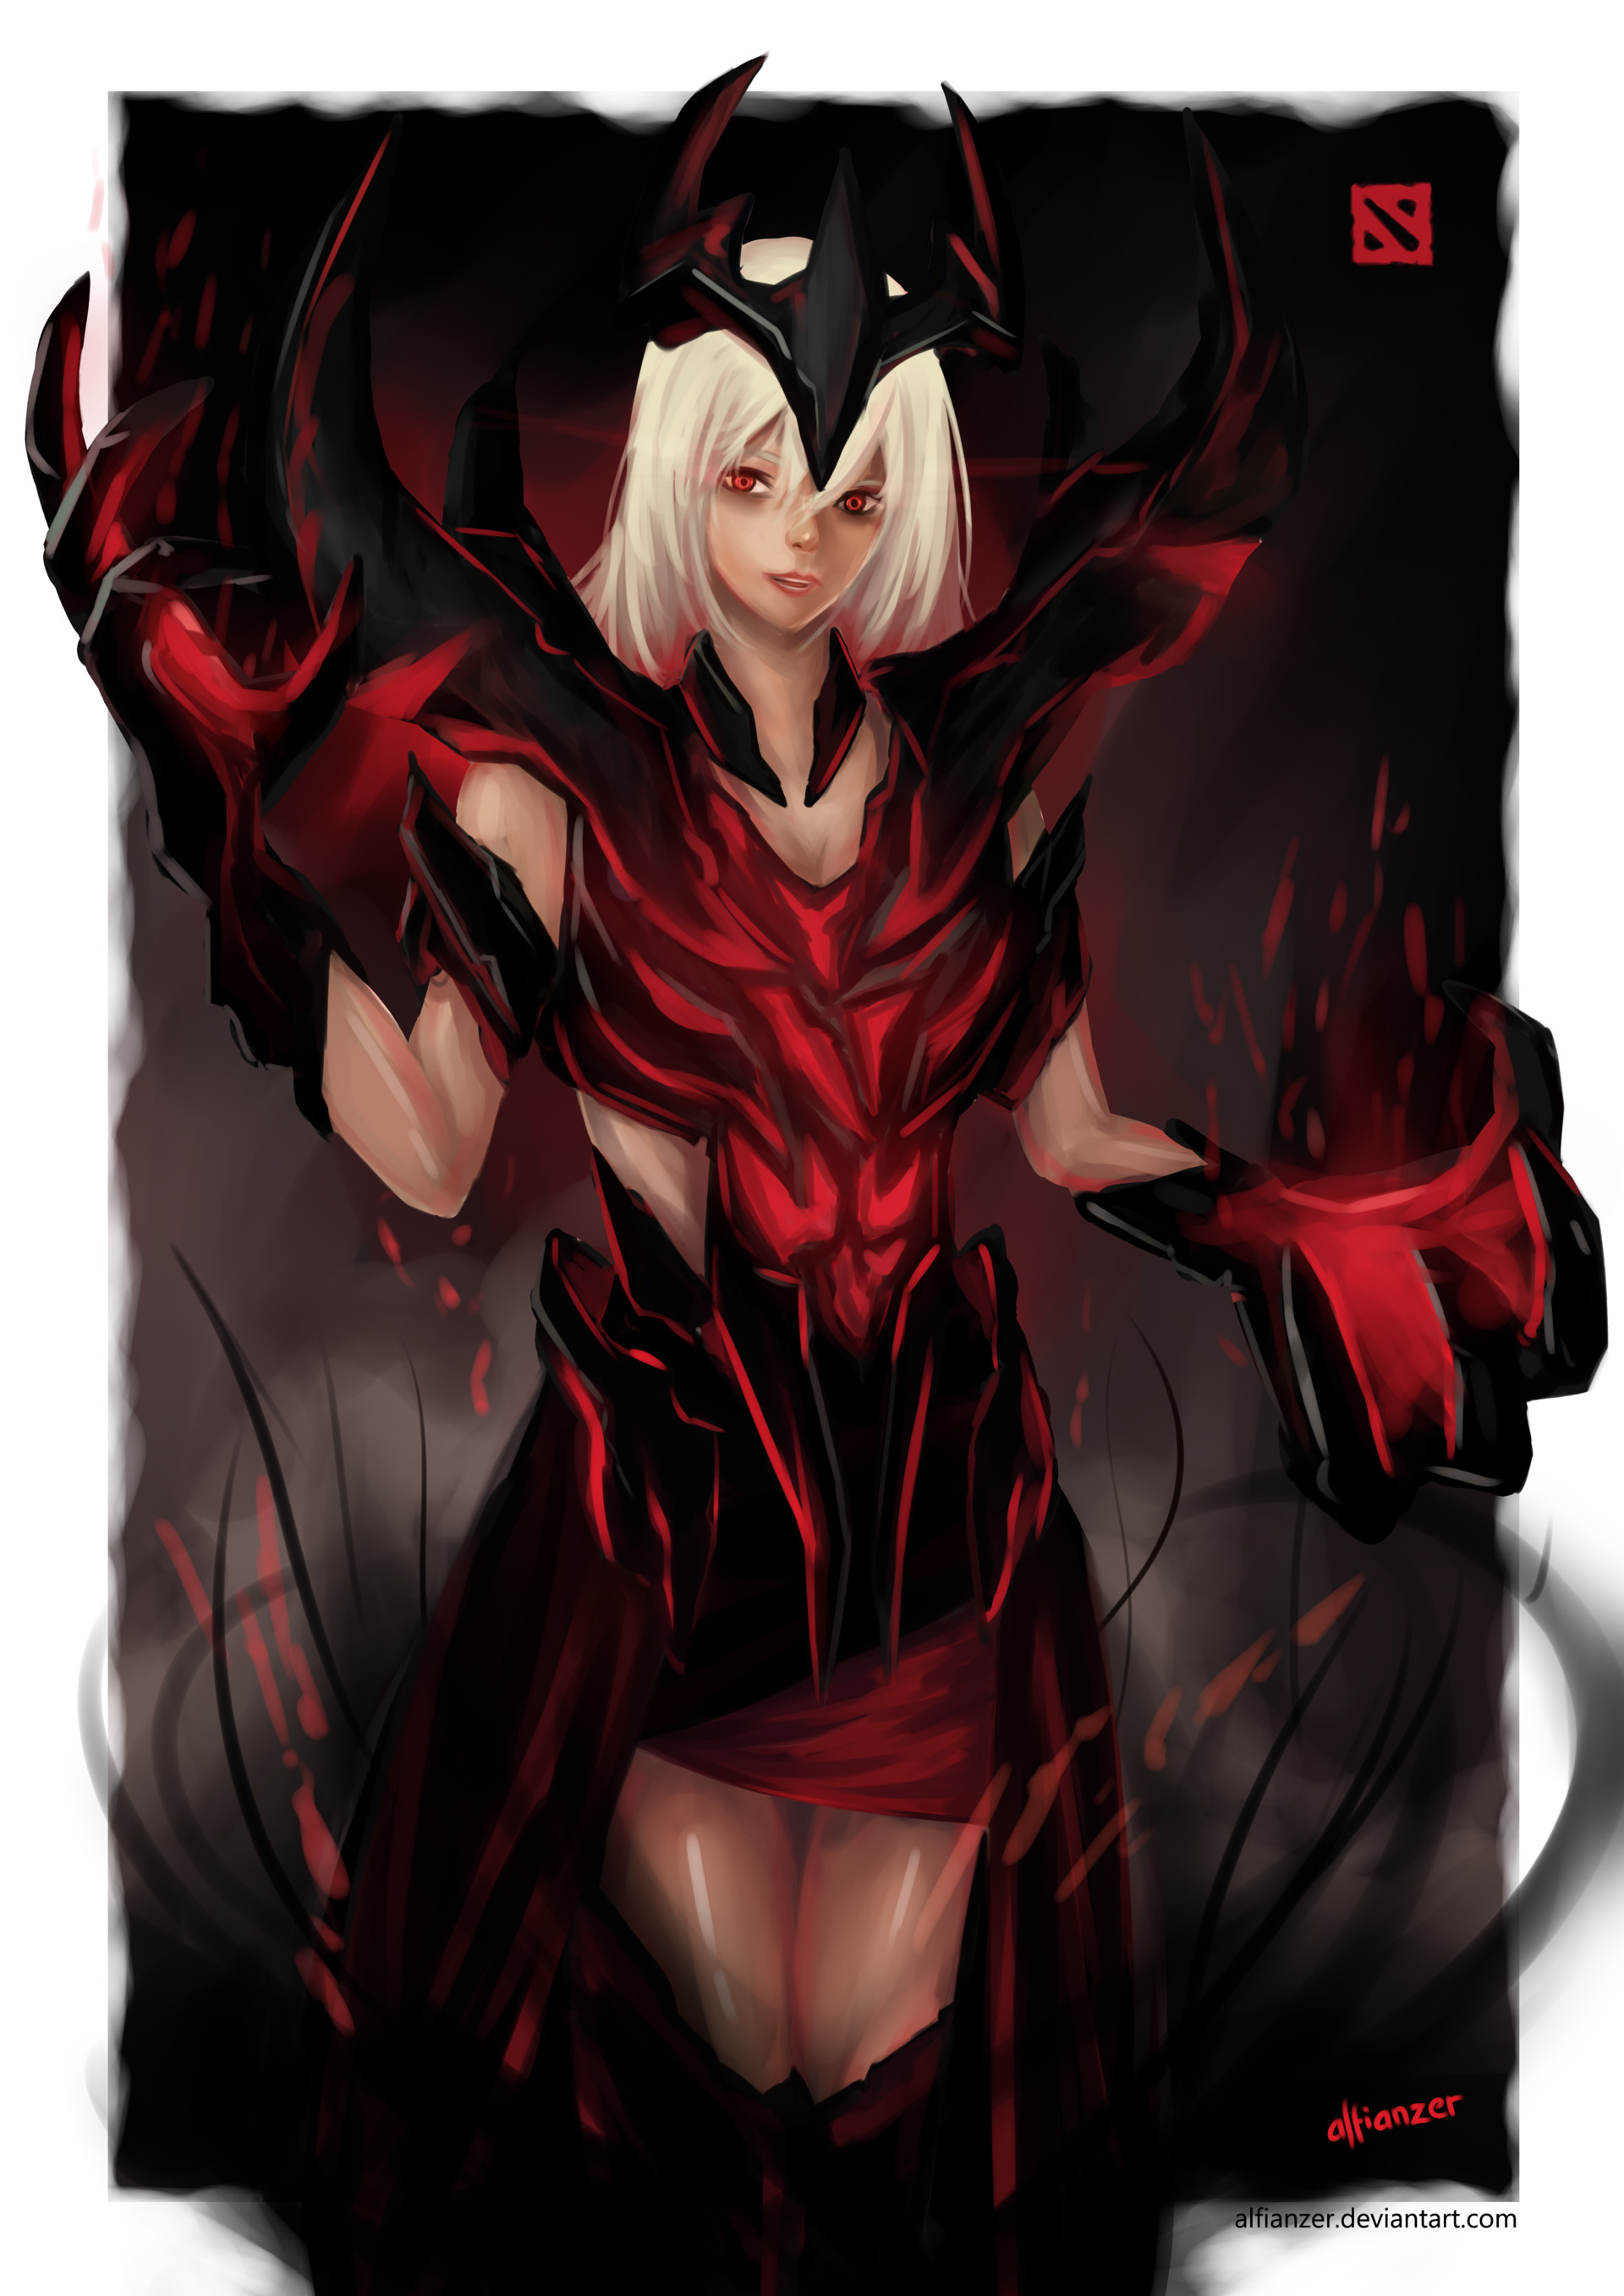 Fanart from Dota2 Character Shadow Fiend Female version hehe.